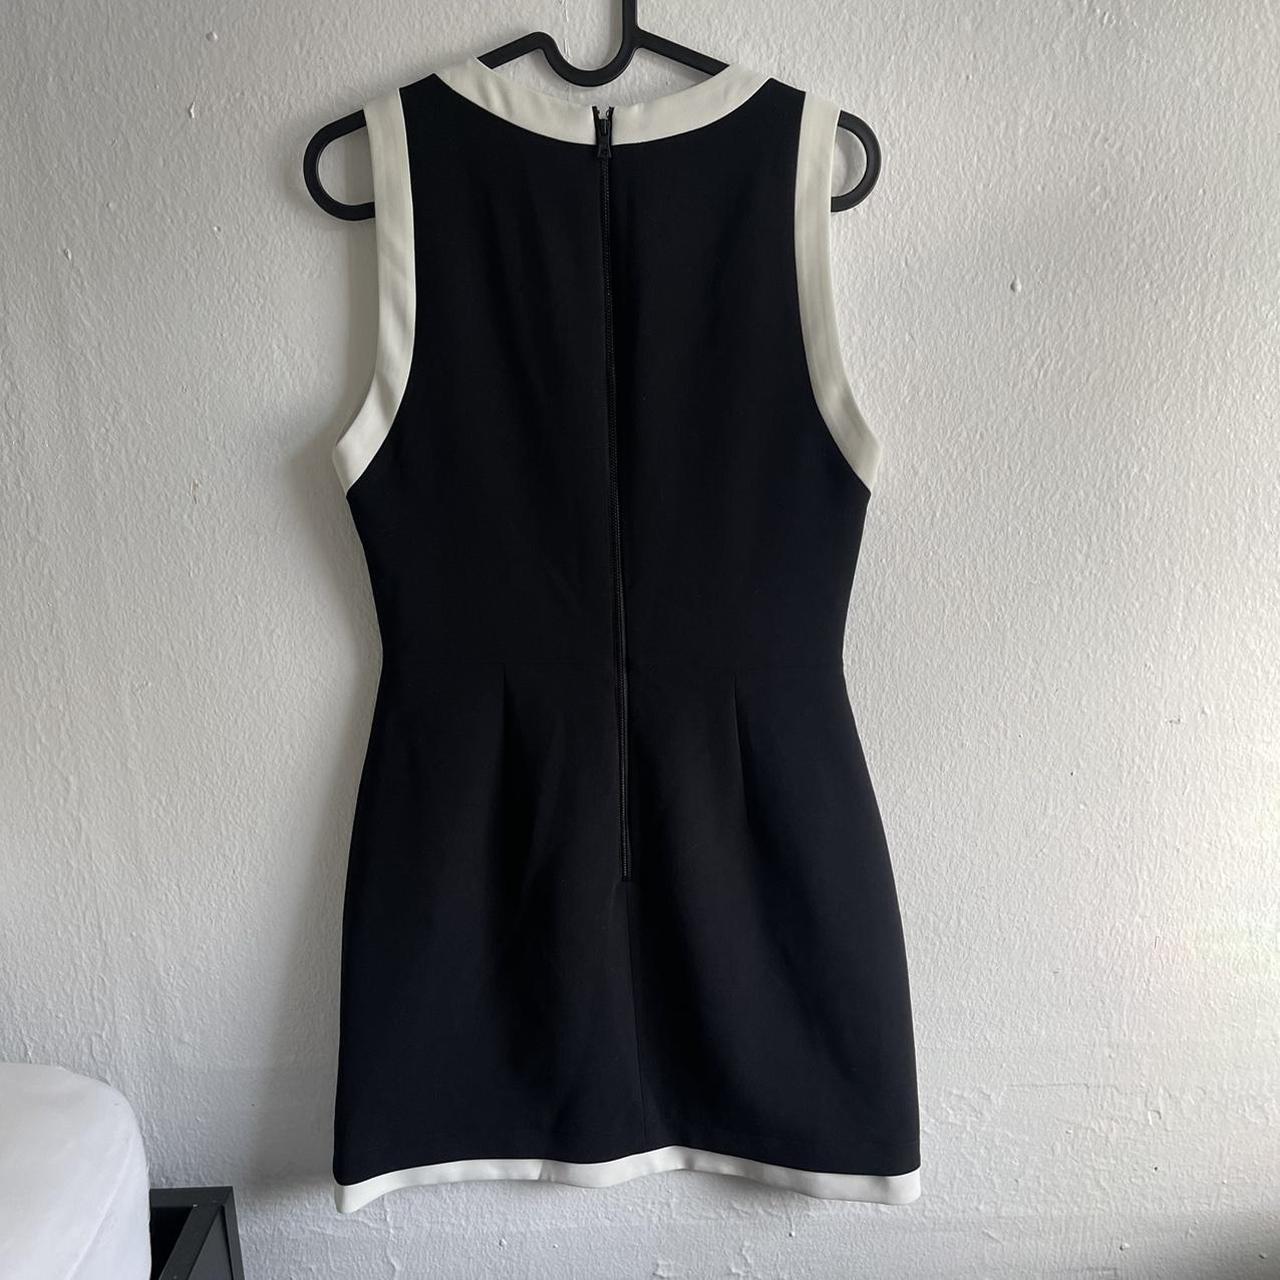 alice + olivia Women's Black and White Dress (2)